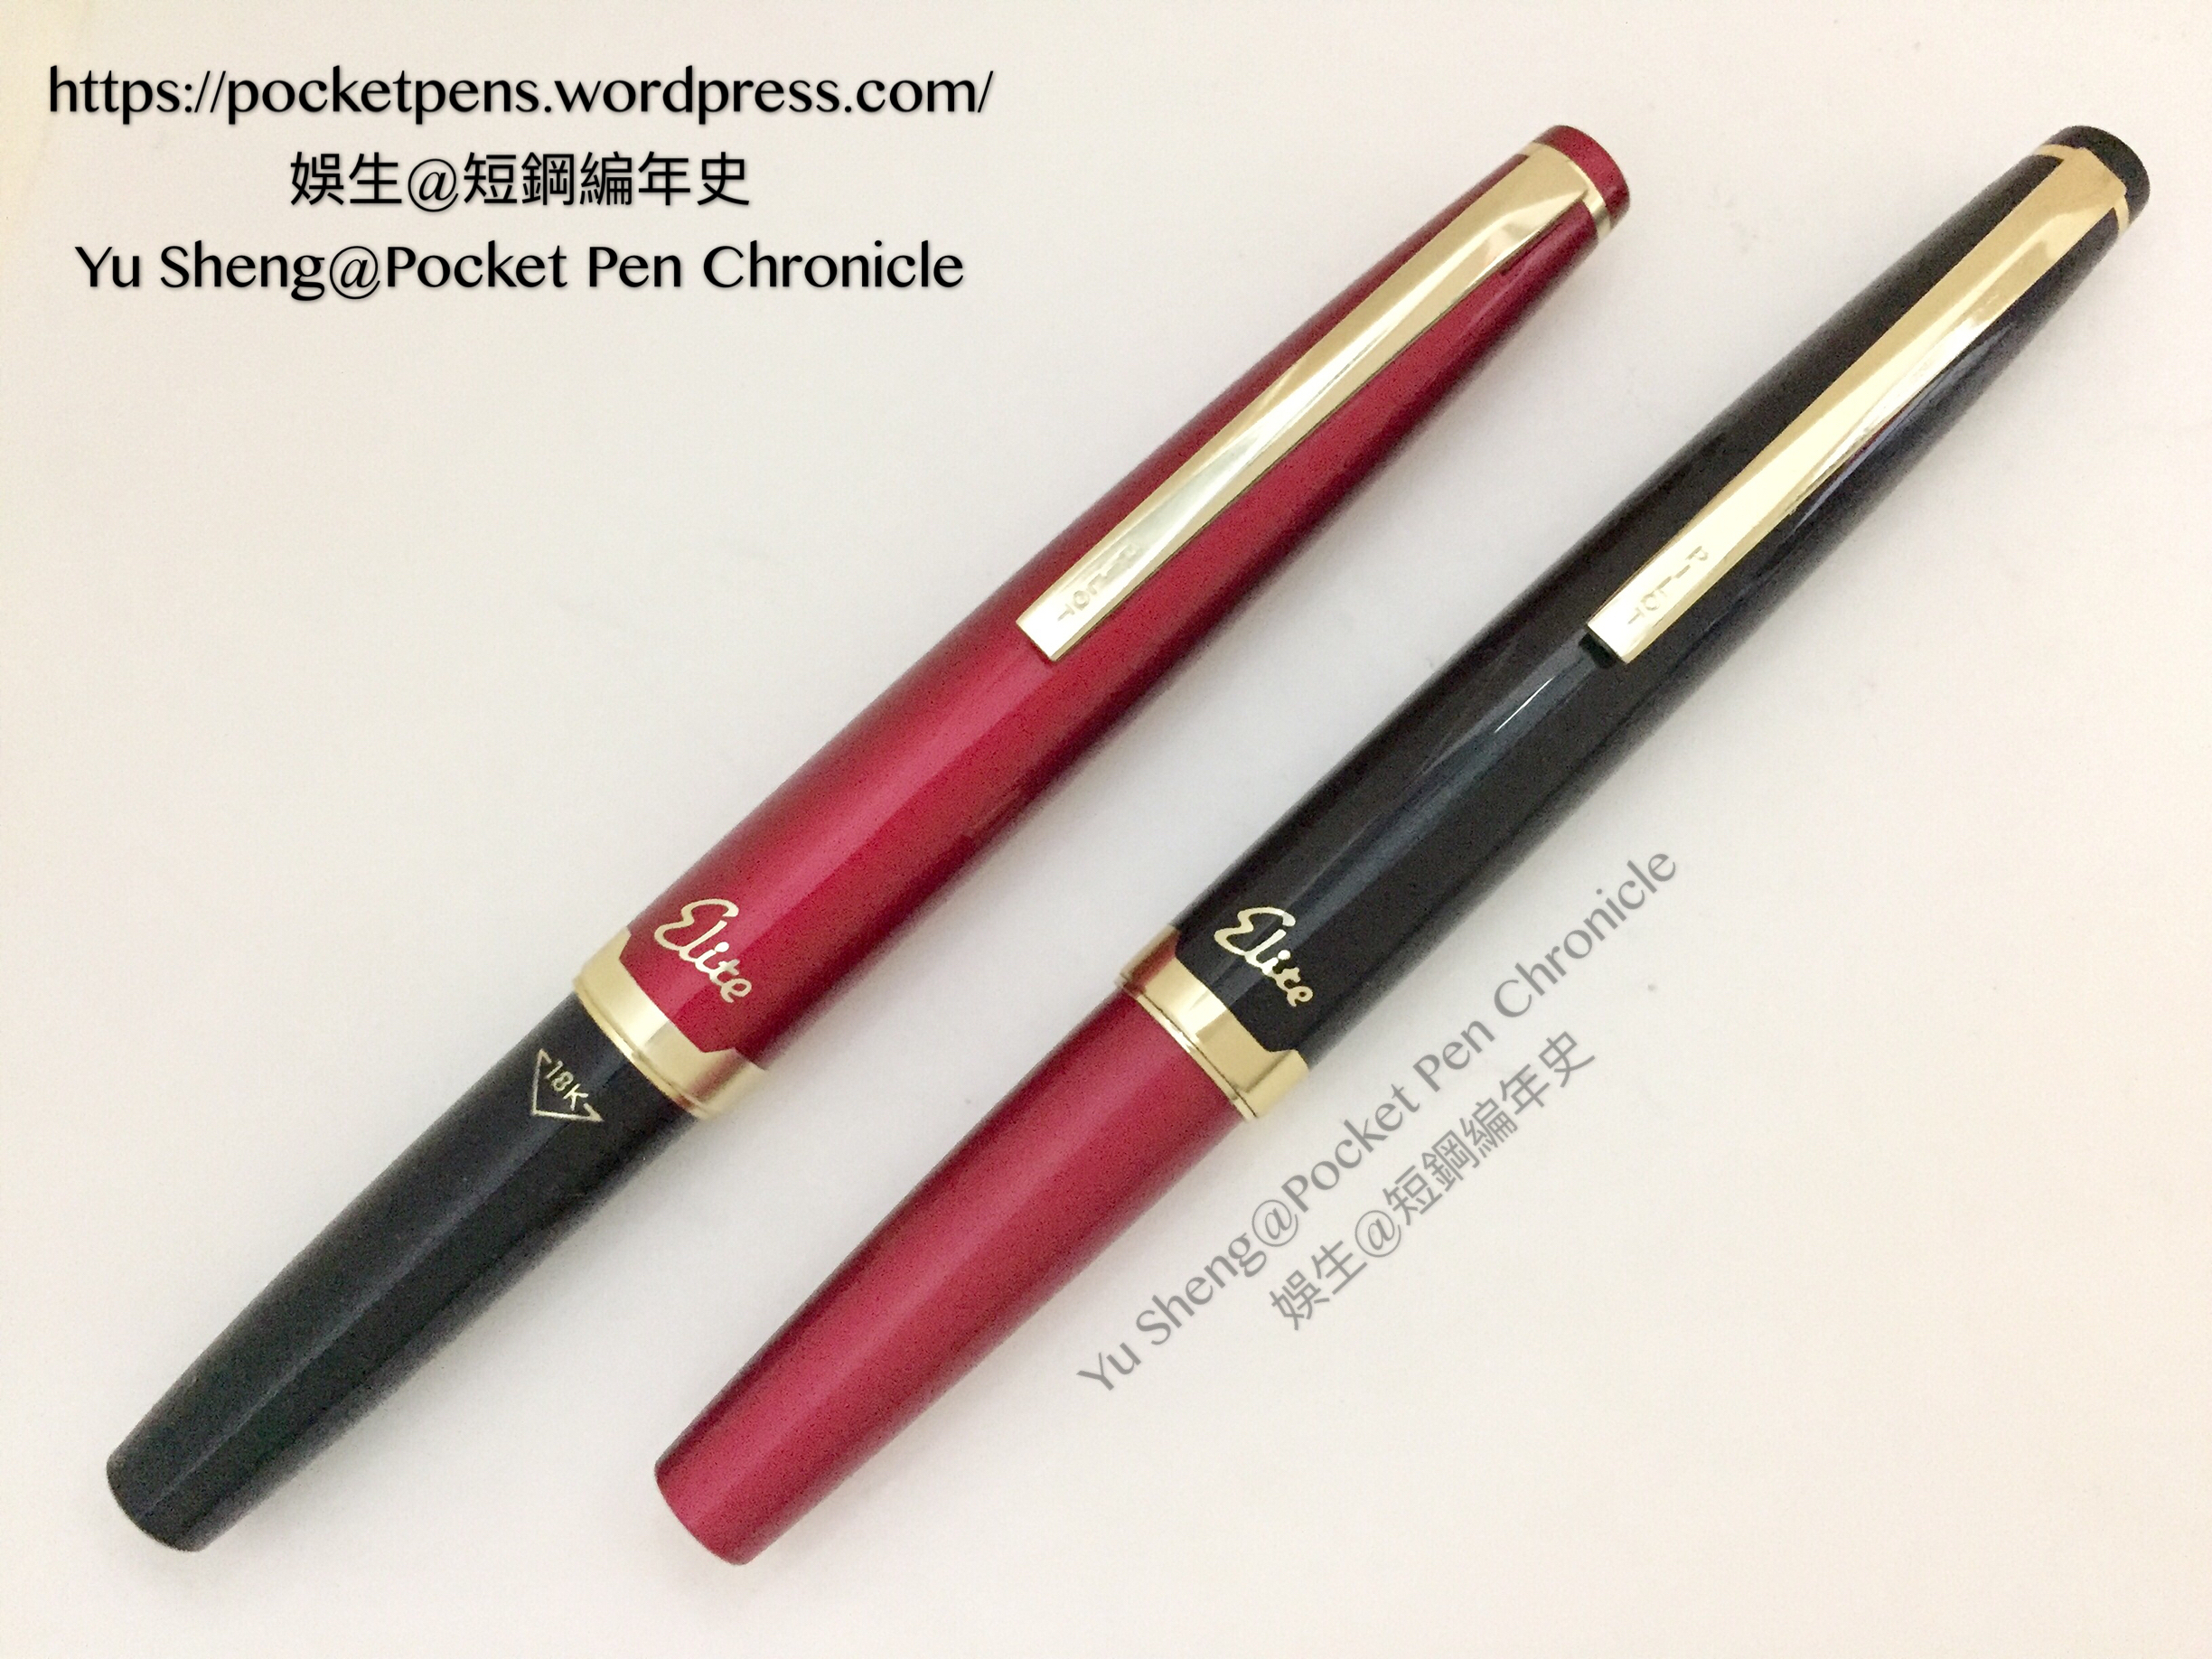 Red KaraKara and Black Elite S pocket pen